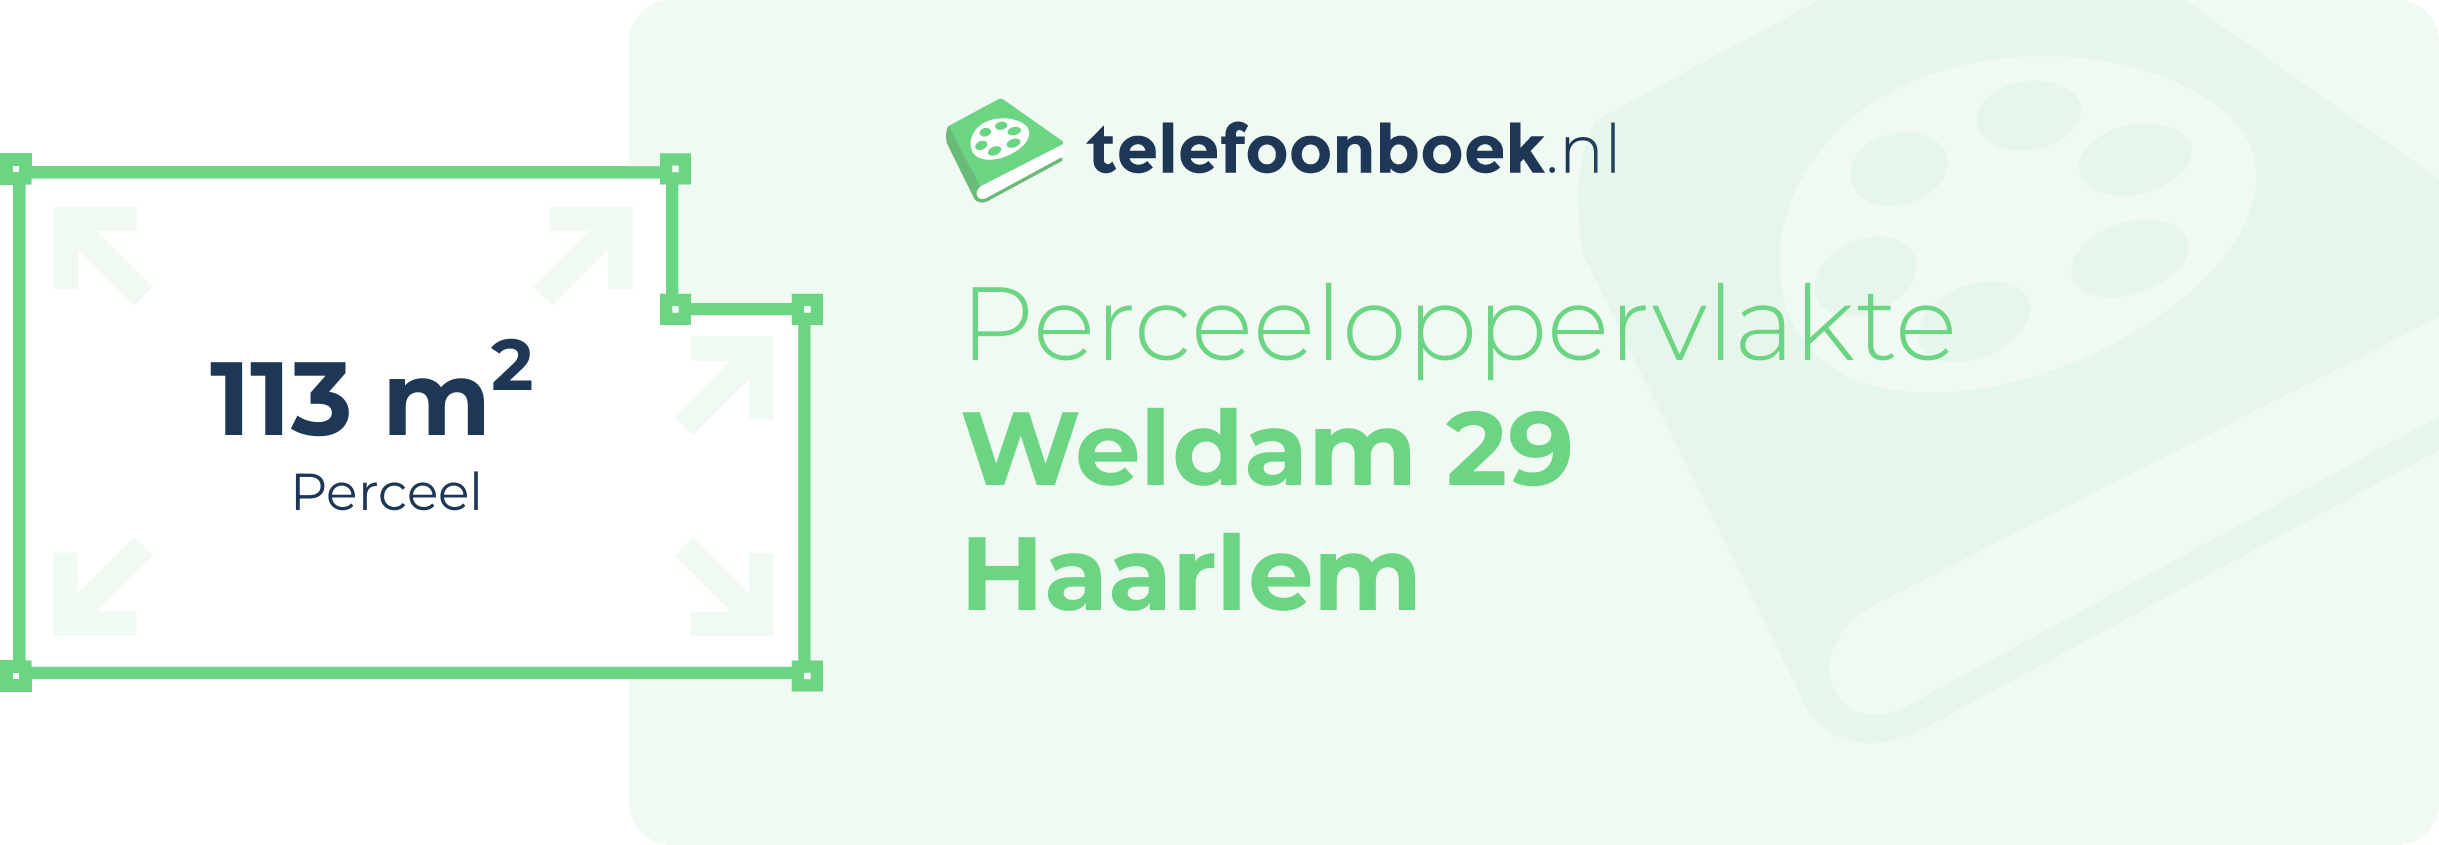 Perceeloppervlakte Weldam 29 Haarlem